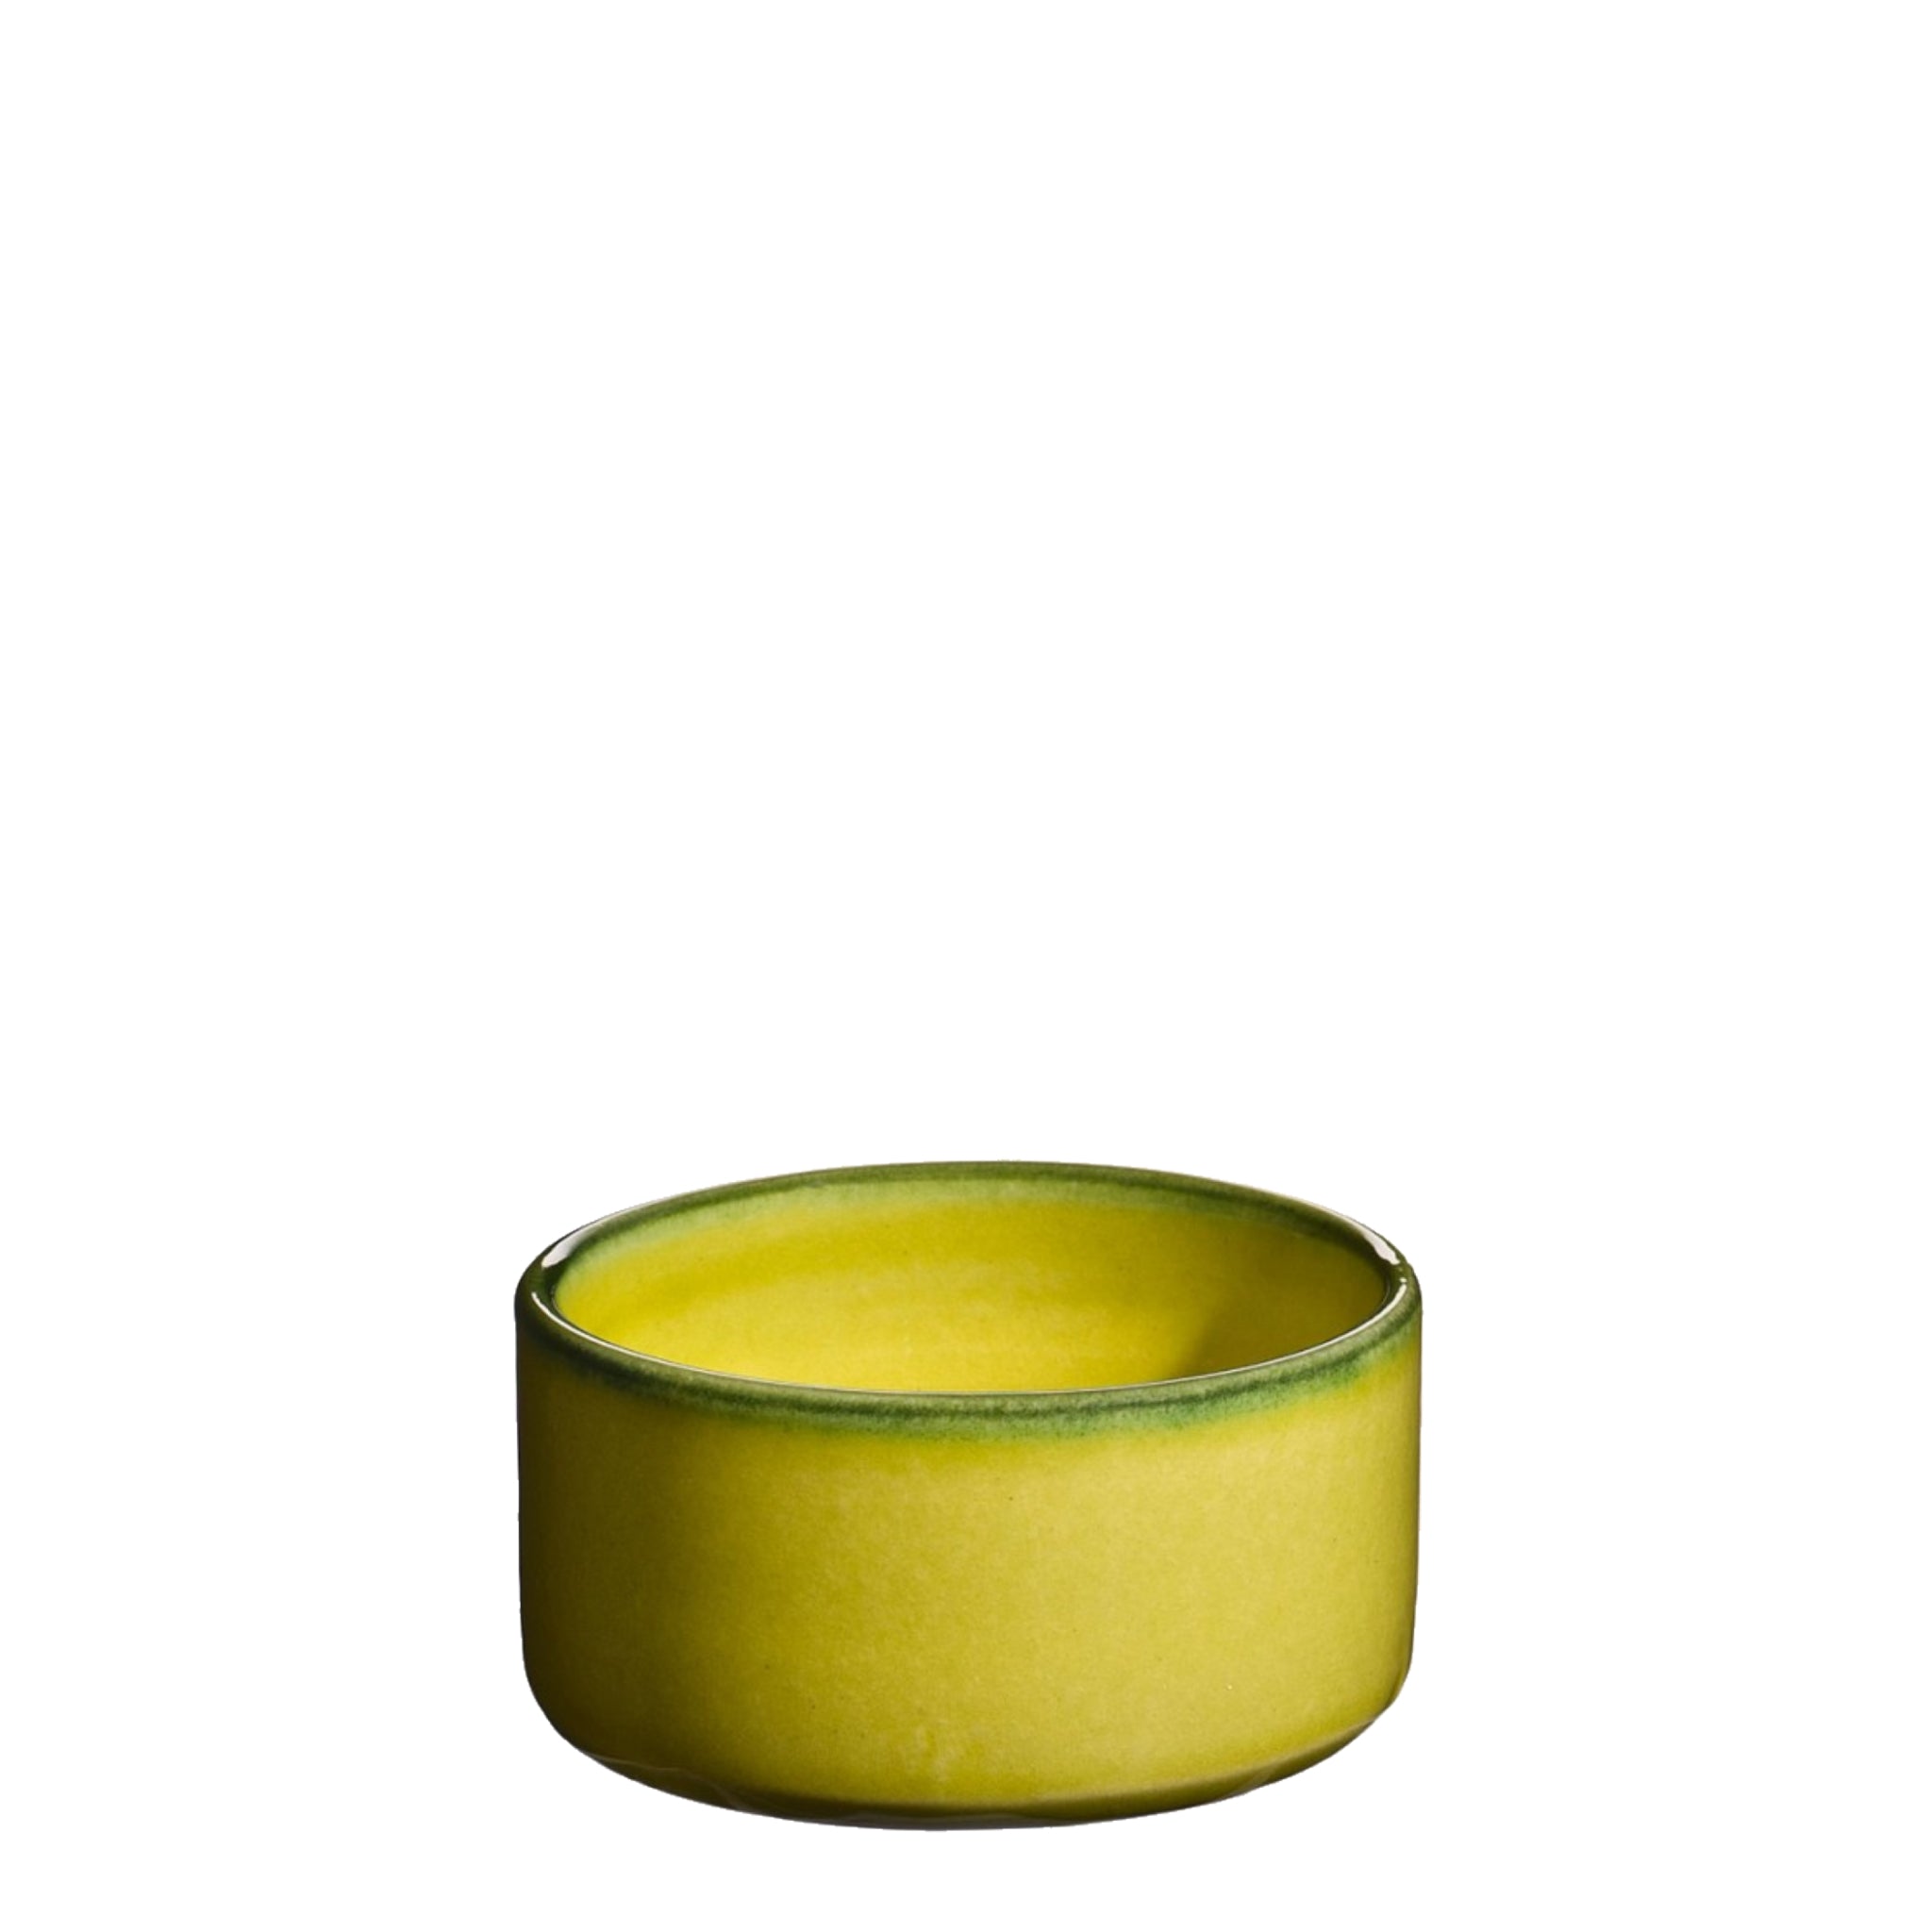 Lille håndlavet keramik skål ramekin petit ravier i farven pistaciegrøn fra Atelier Bernex, Oliviers & Co